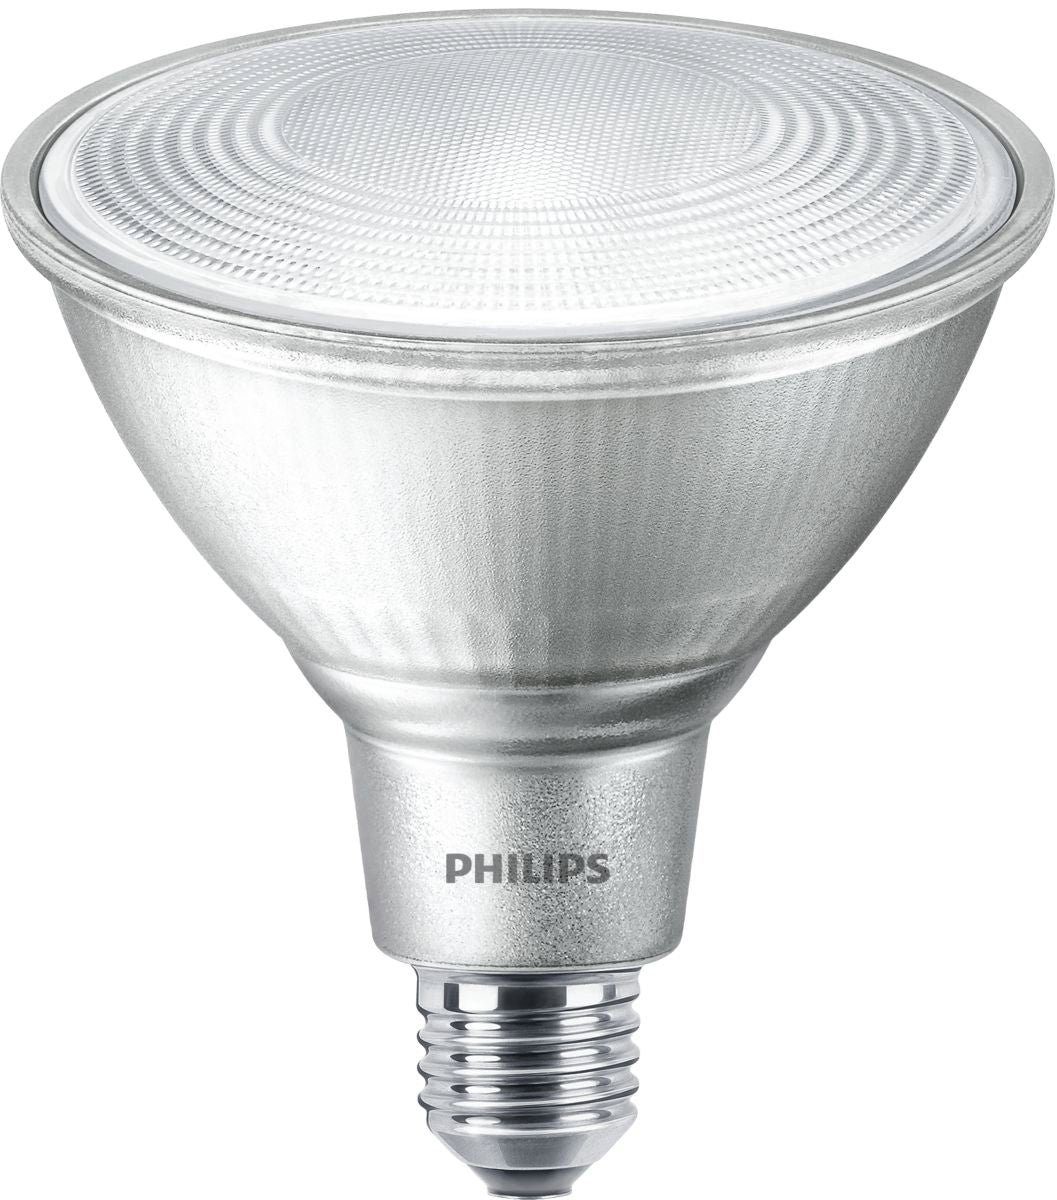 Philips Lighting LED-Leuchtmittel LED ersetzt 60W, E27, warmweiß (2700 Kelvin), 750 Lumen, Reflektor